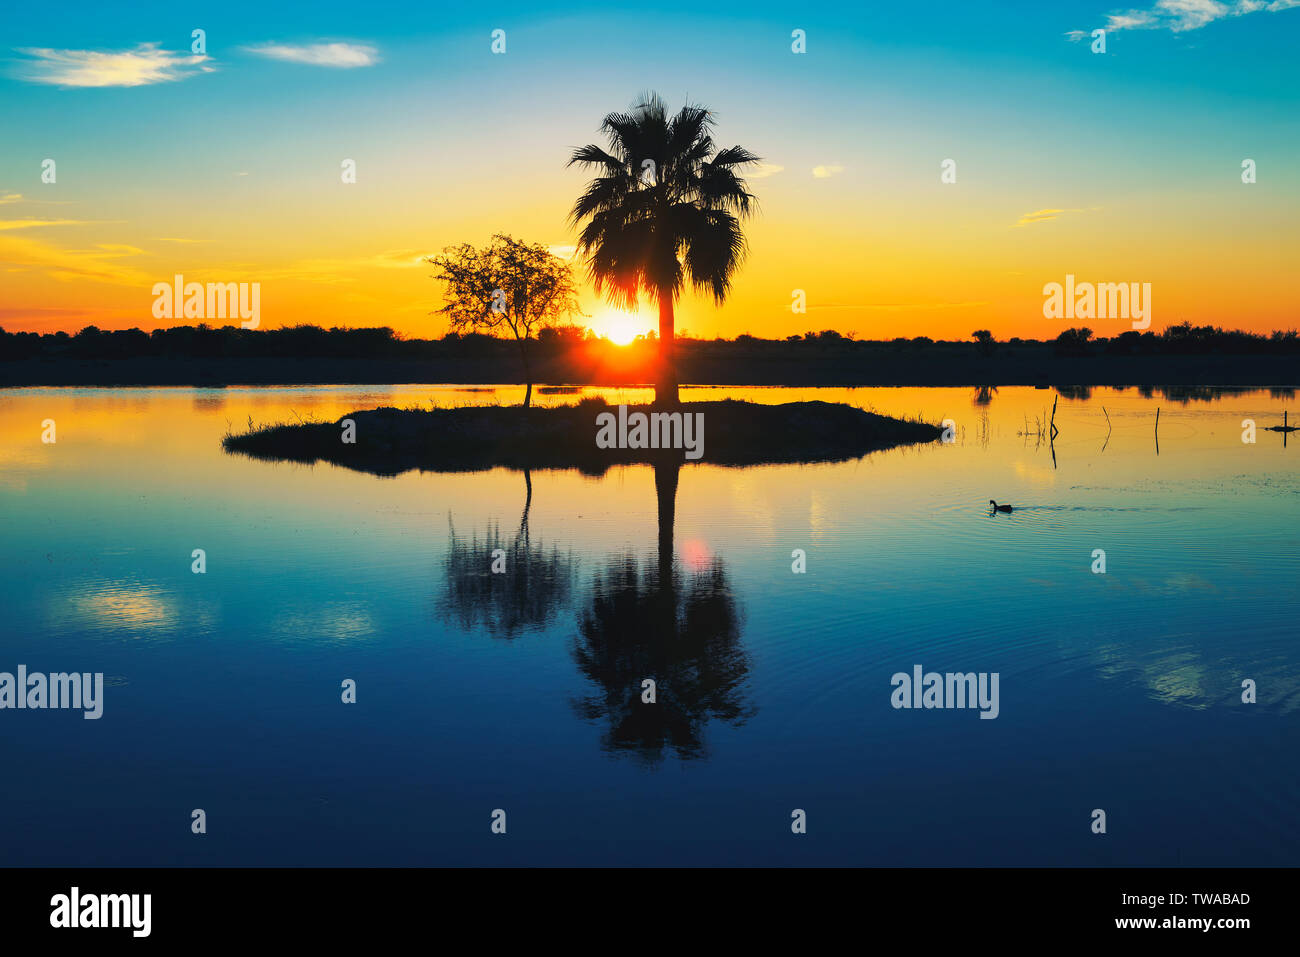 Palm Tree Silhouette mit Reflexion in einem See bei Sonnenuntergang, Namibia, Afrika Stockfoto